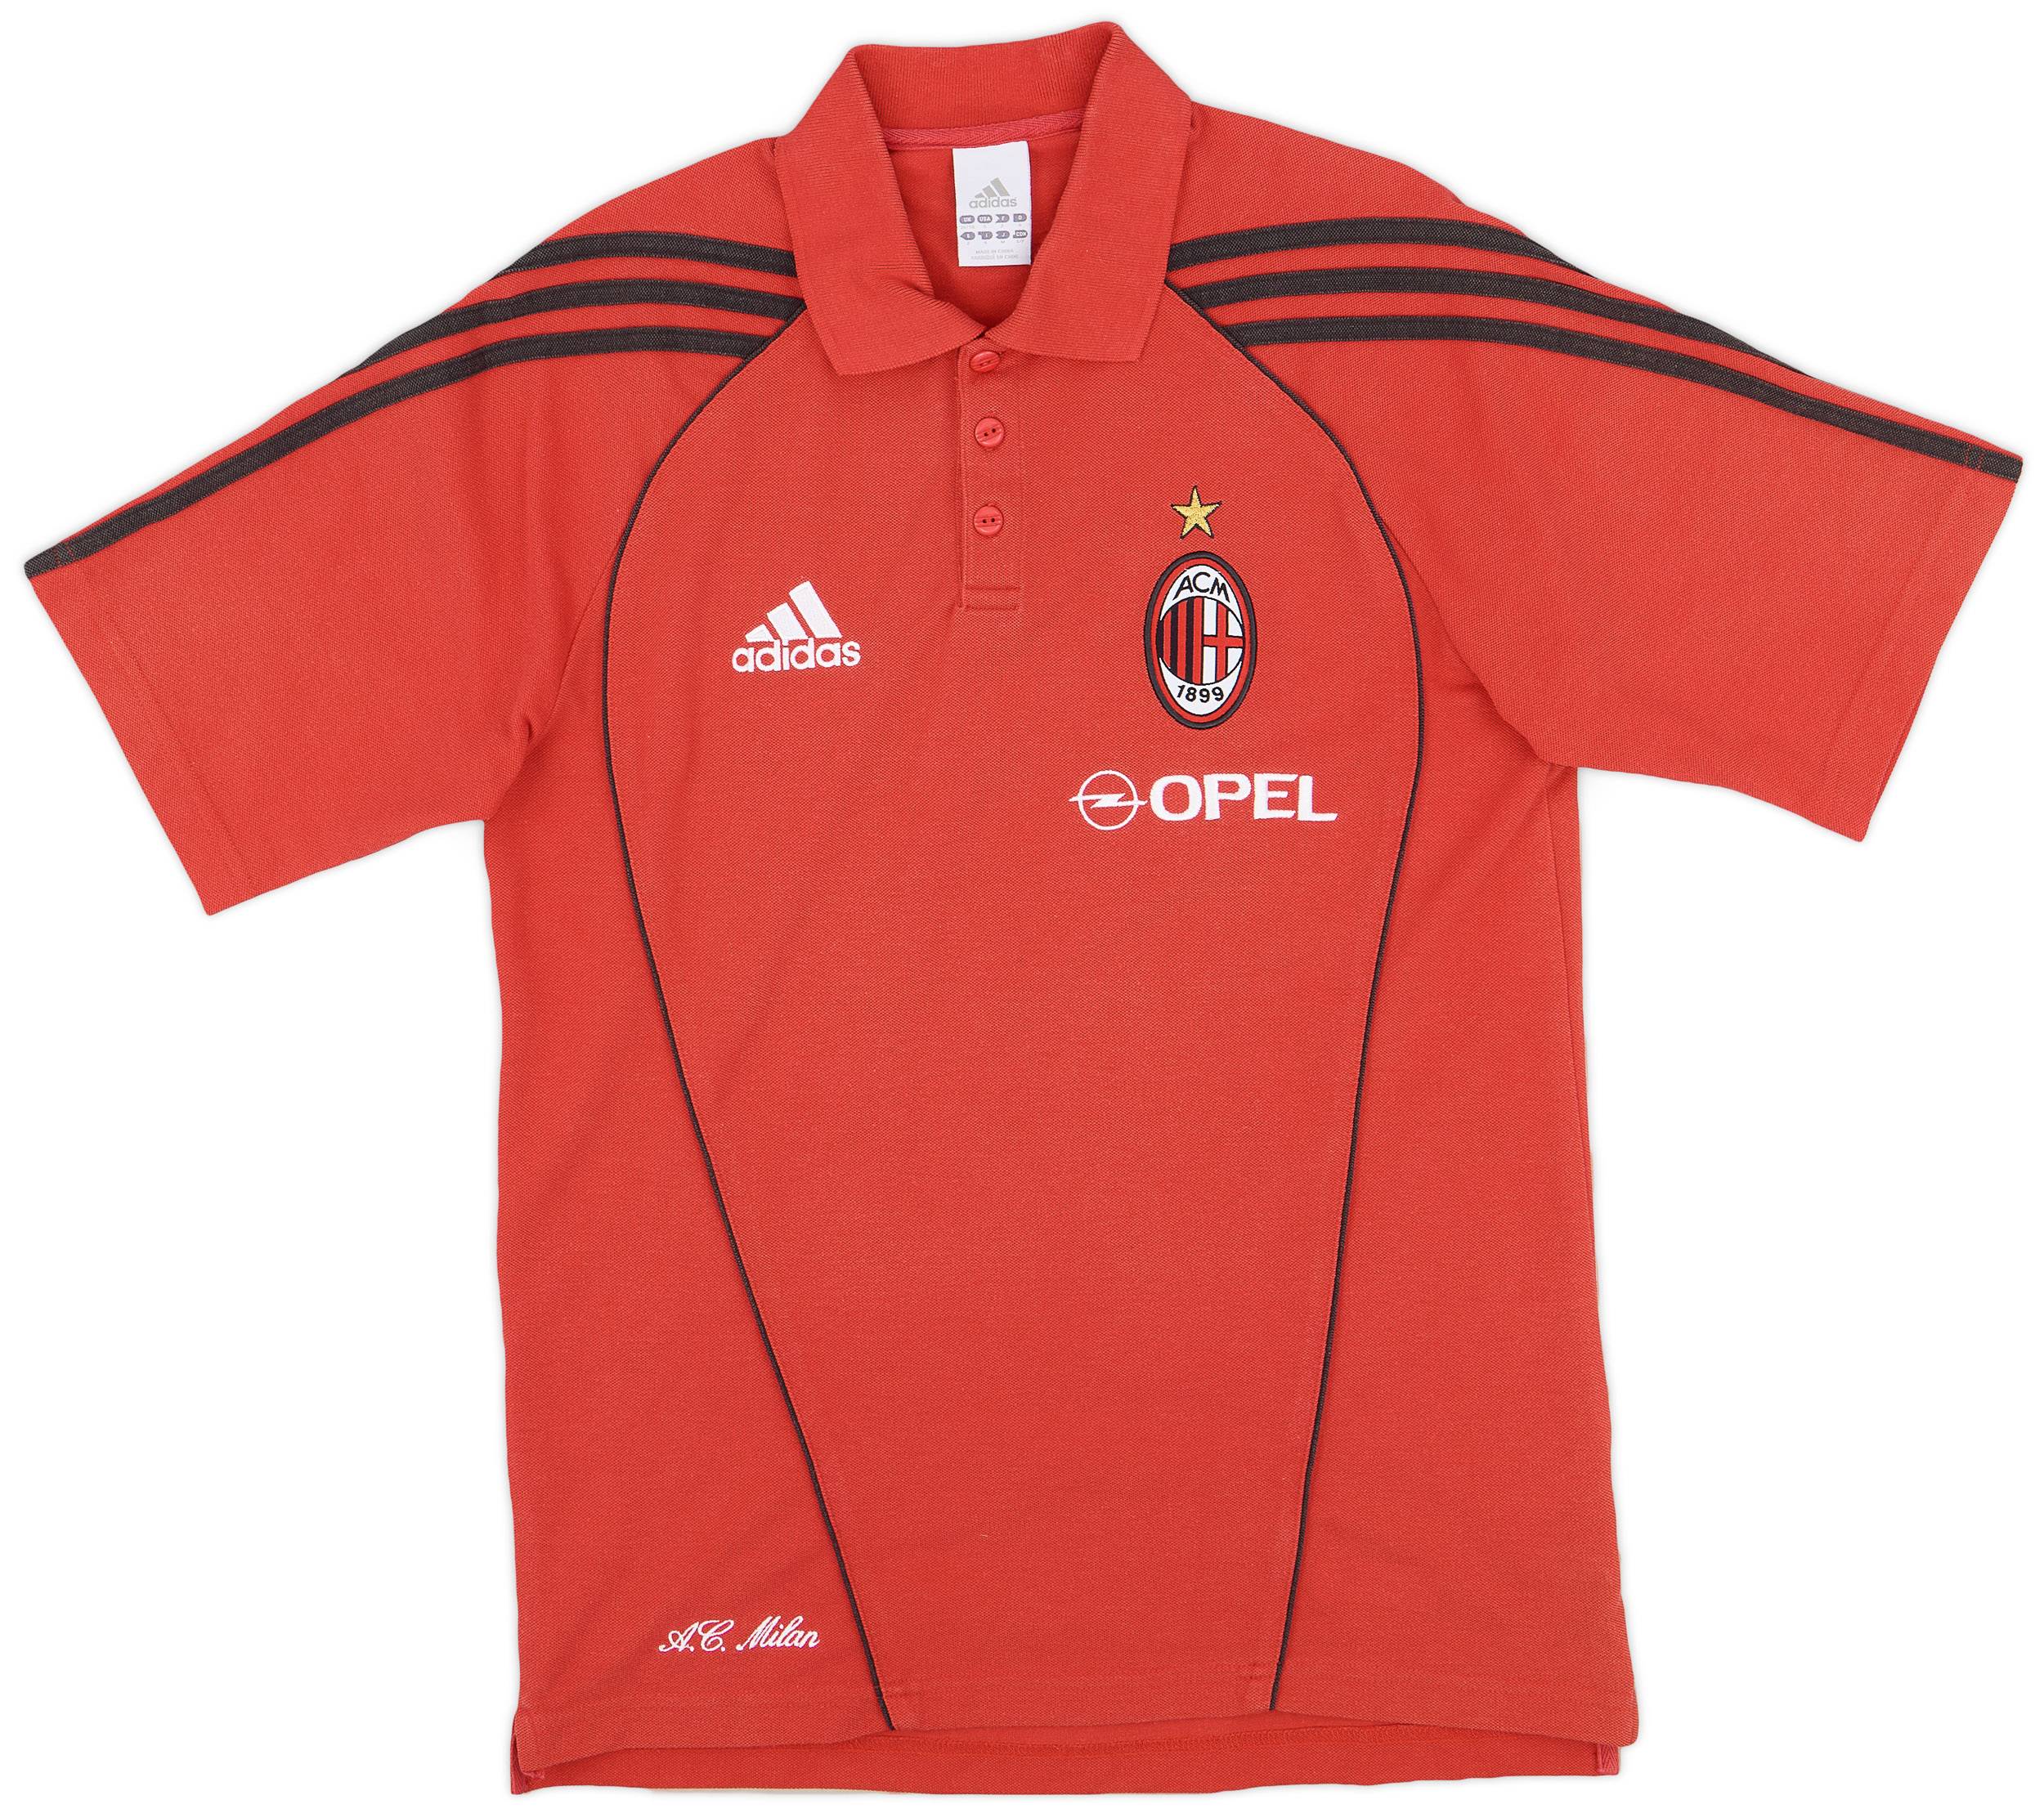 2005-06 AC Milan adidas Polo Shirt - 9/10 - (S)